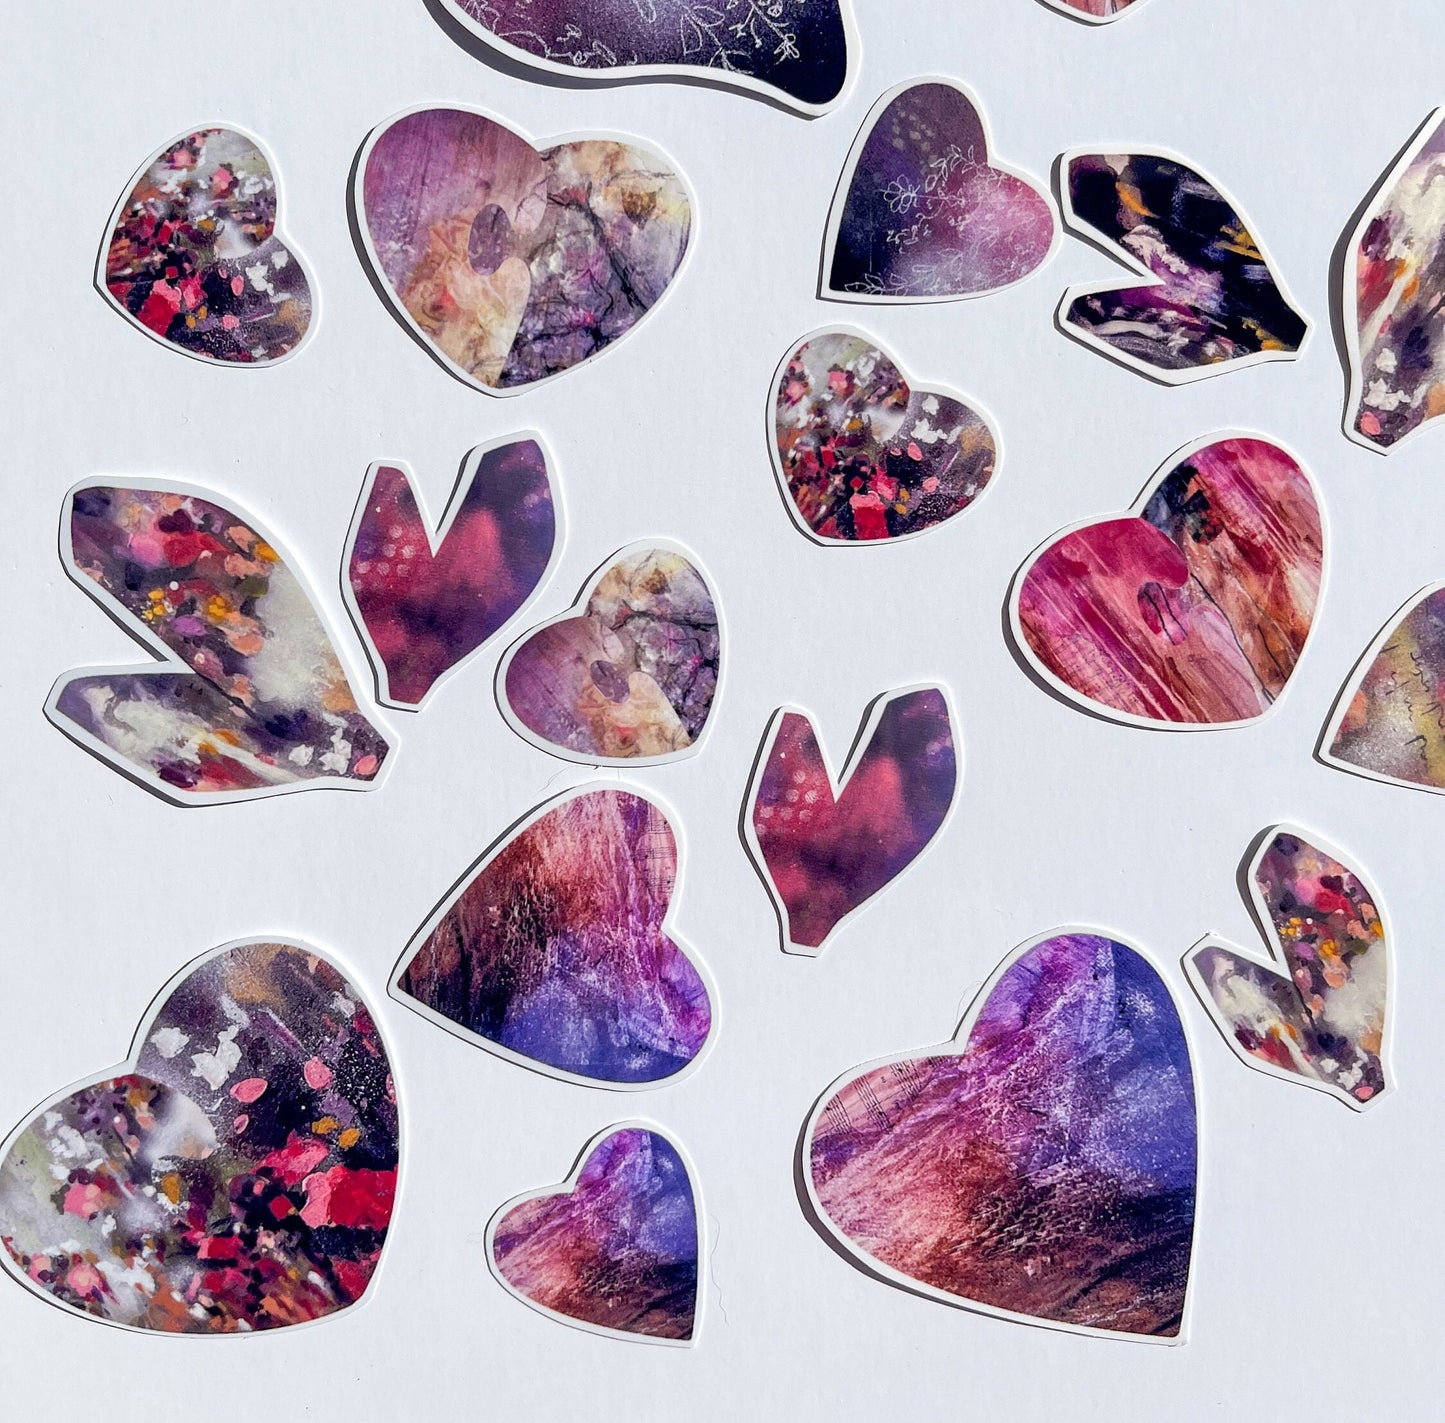 Abstract Heart Shaped Sticker Pack | Valentine's Sticker Heart | Abstract Art Heart Stickers Collage Fodder - Set of 21 (Grab Bag)